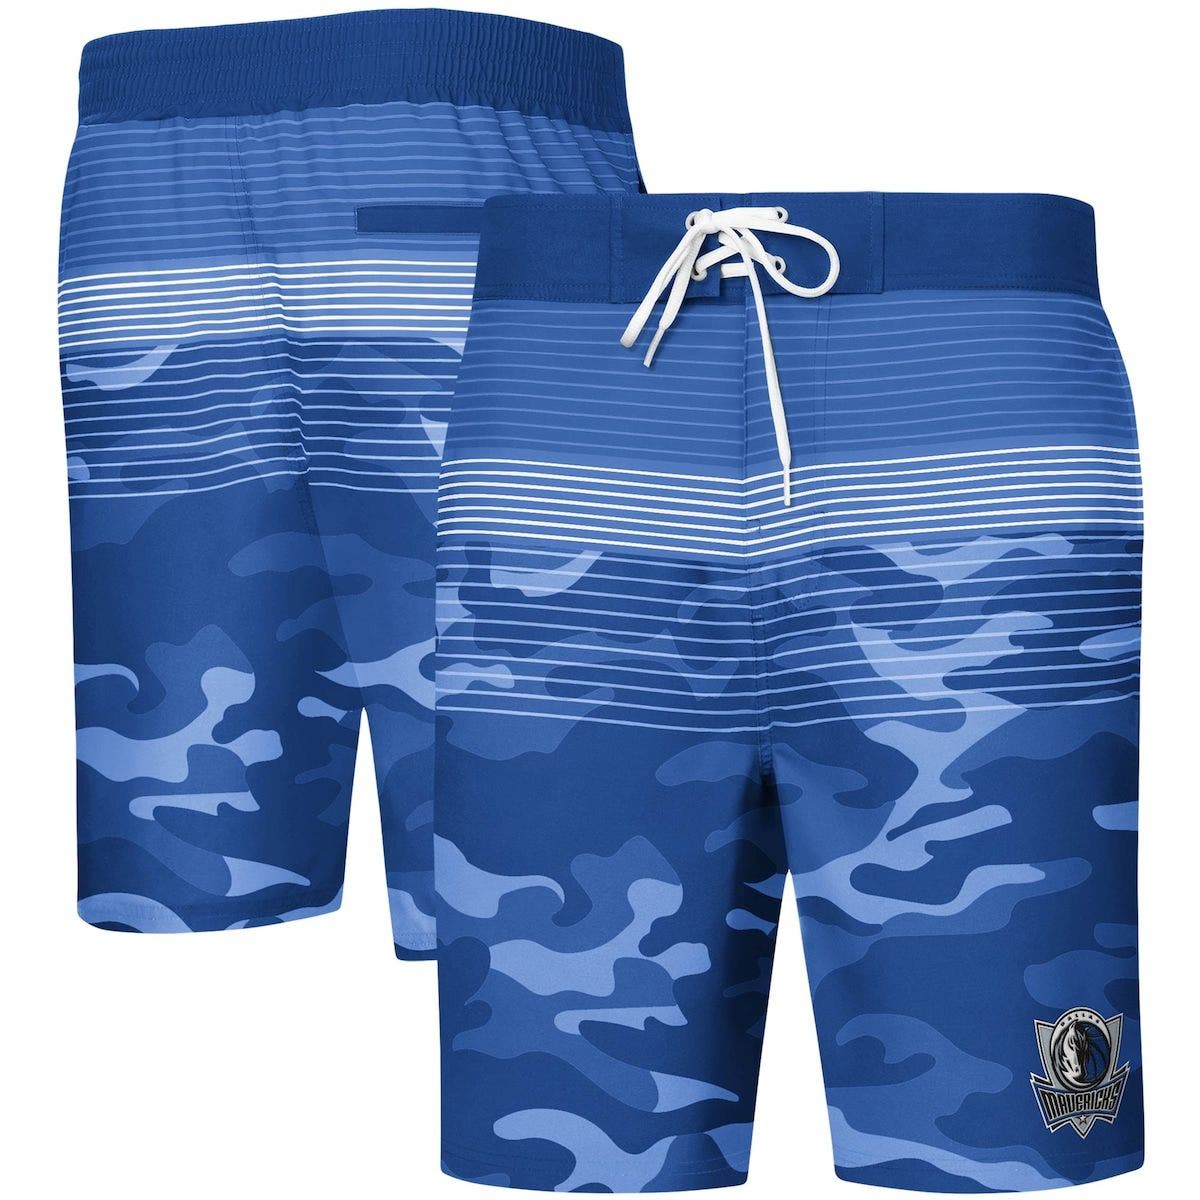 YOIGNG Boardshorts Maple Leaf Canadian Mens Quick Dry Swim Trunks Beach Shorts 